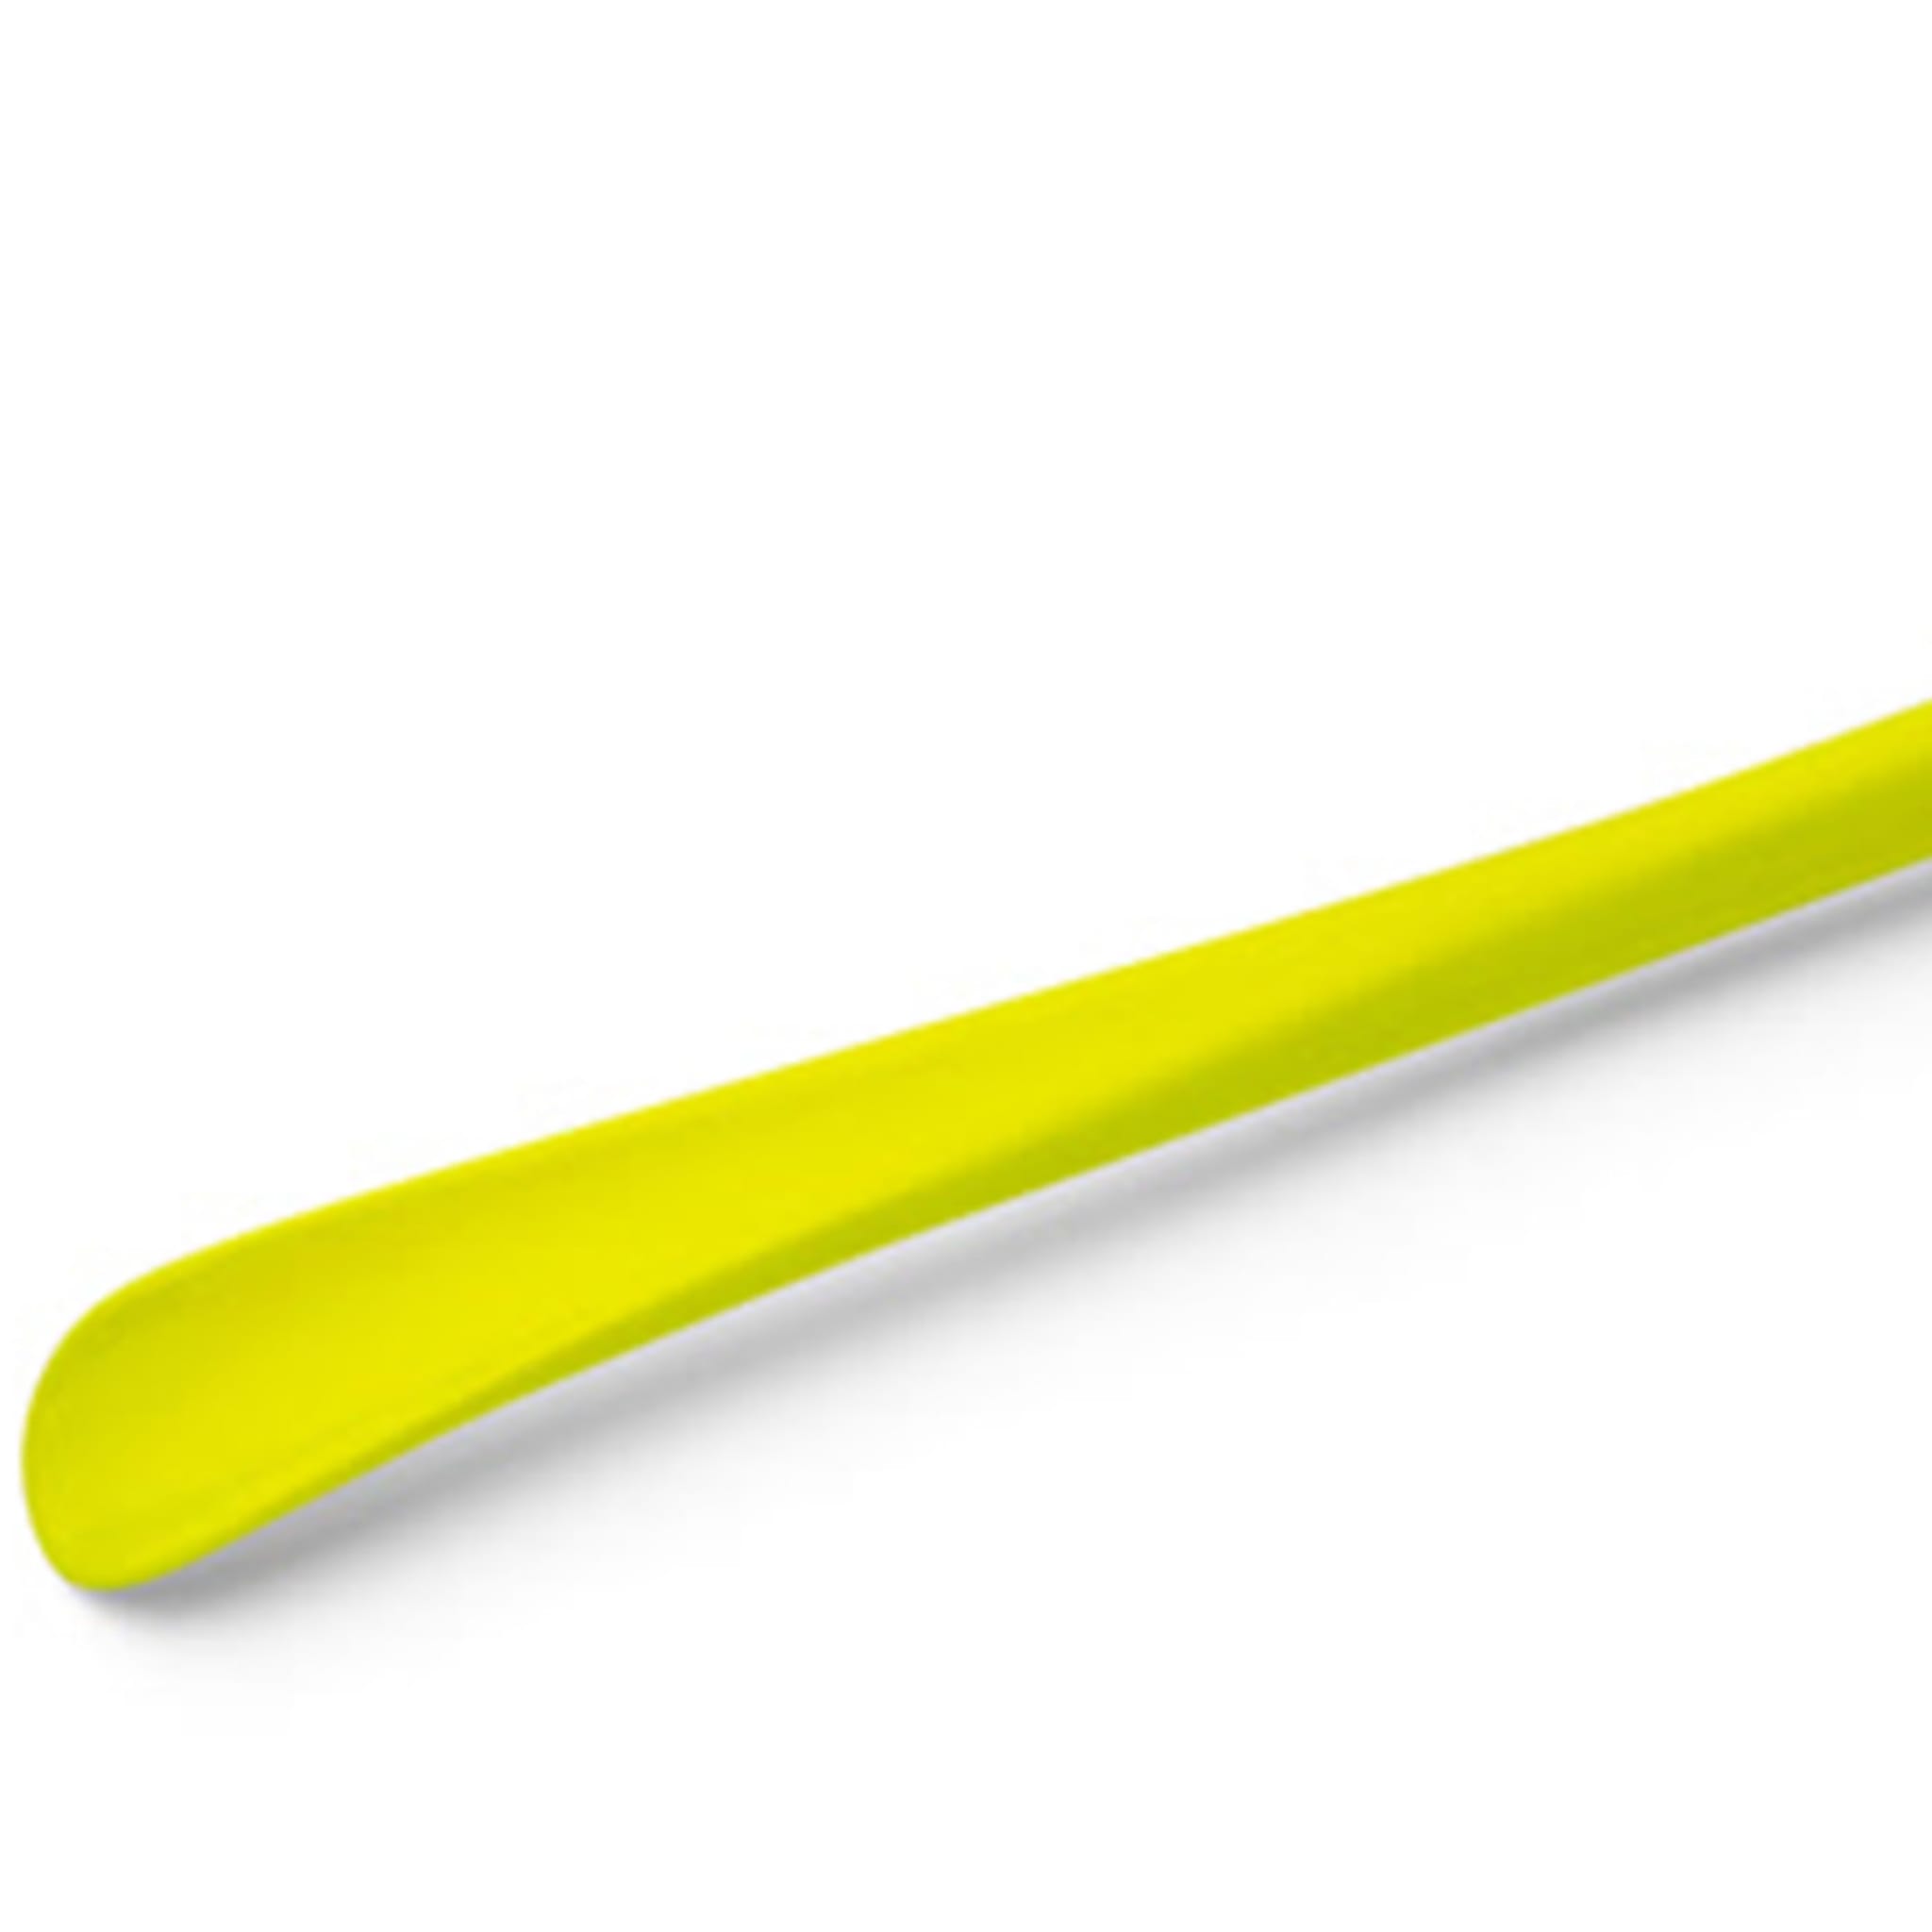 Sagola Neon Yellow Shoe Horn - Alternative view 1